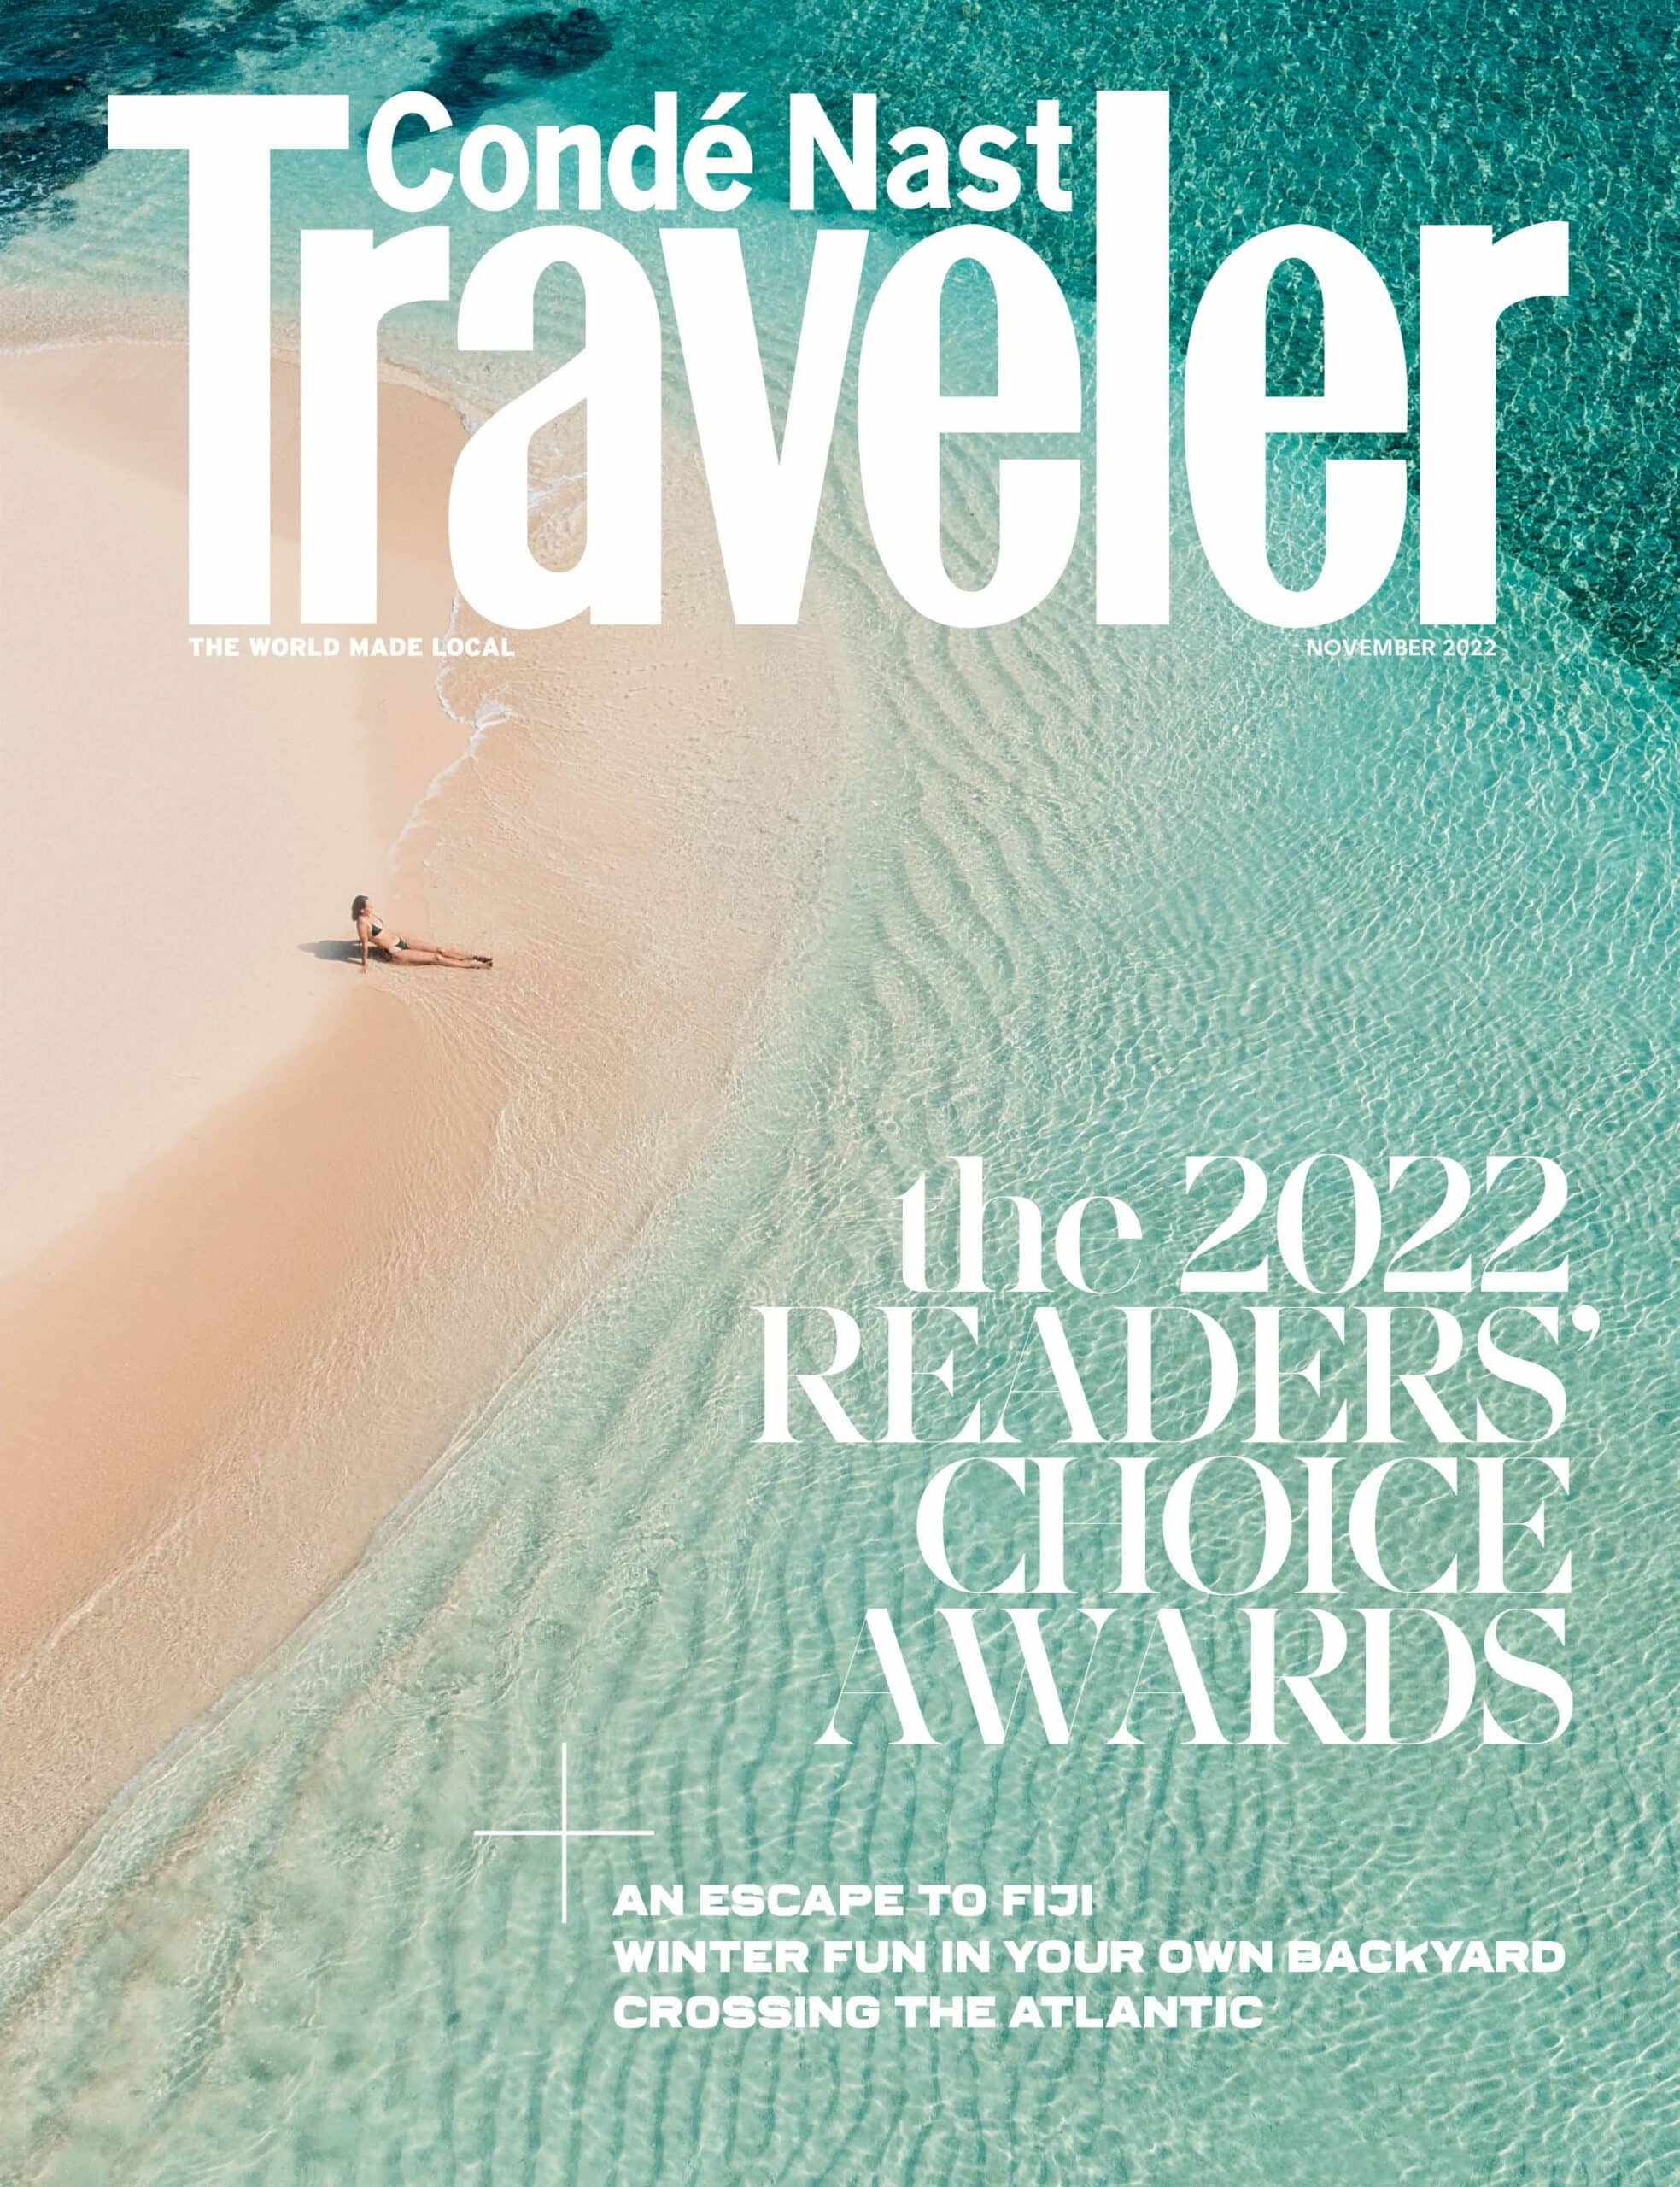 Condé Nast Traveler Readers Choice Awards